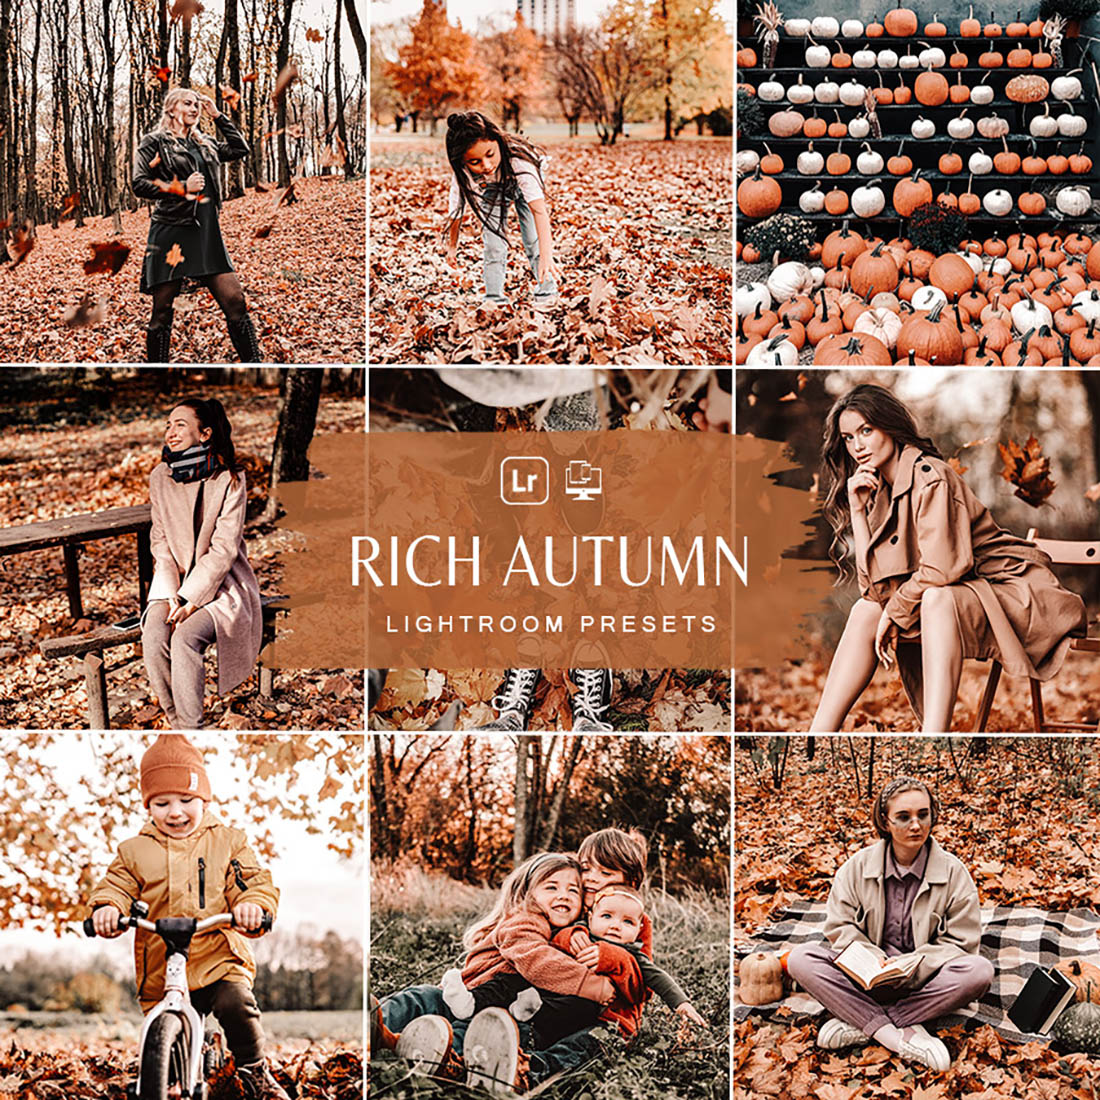 25 Rich Autumn Lightroom Desktop and Mobile Presets cover image.